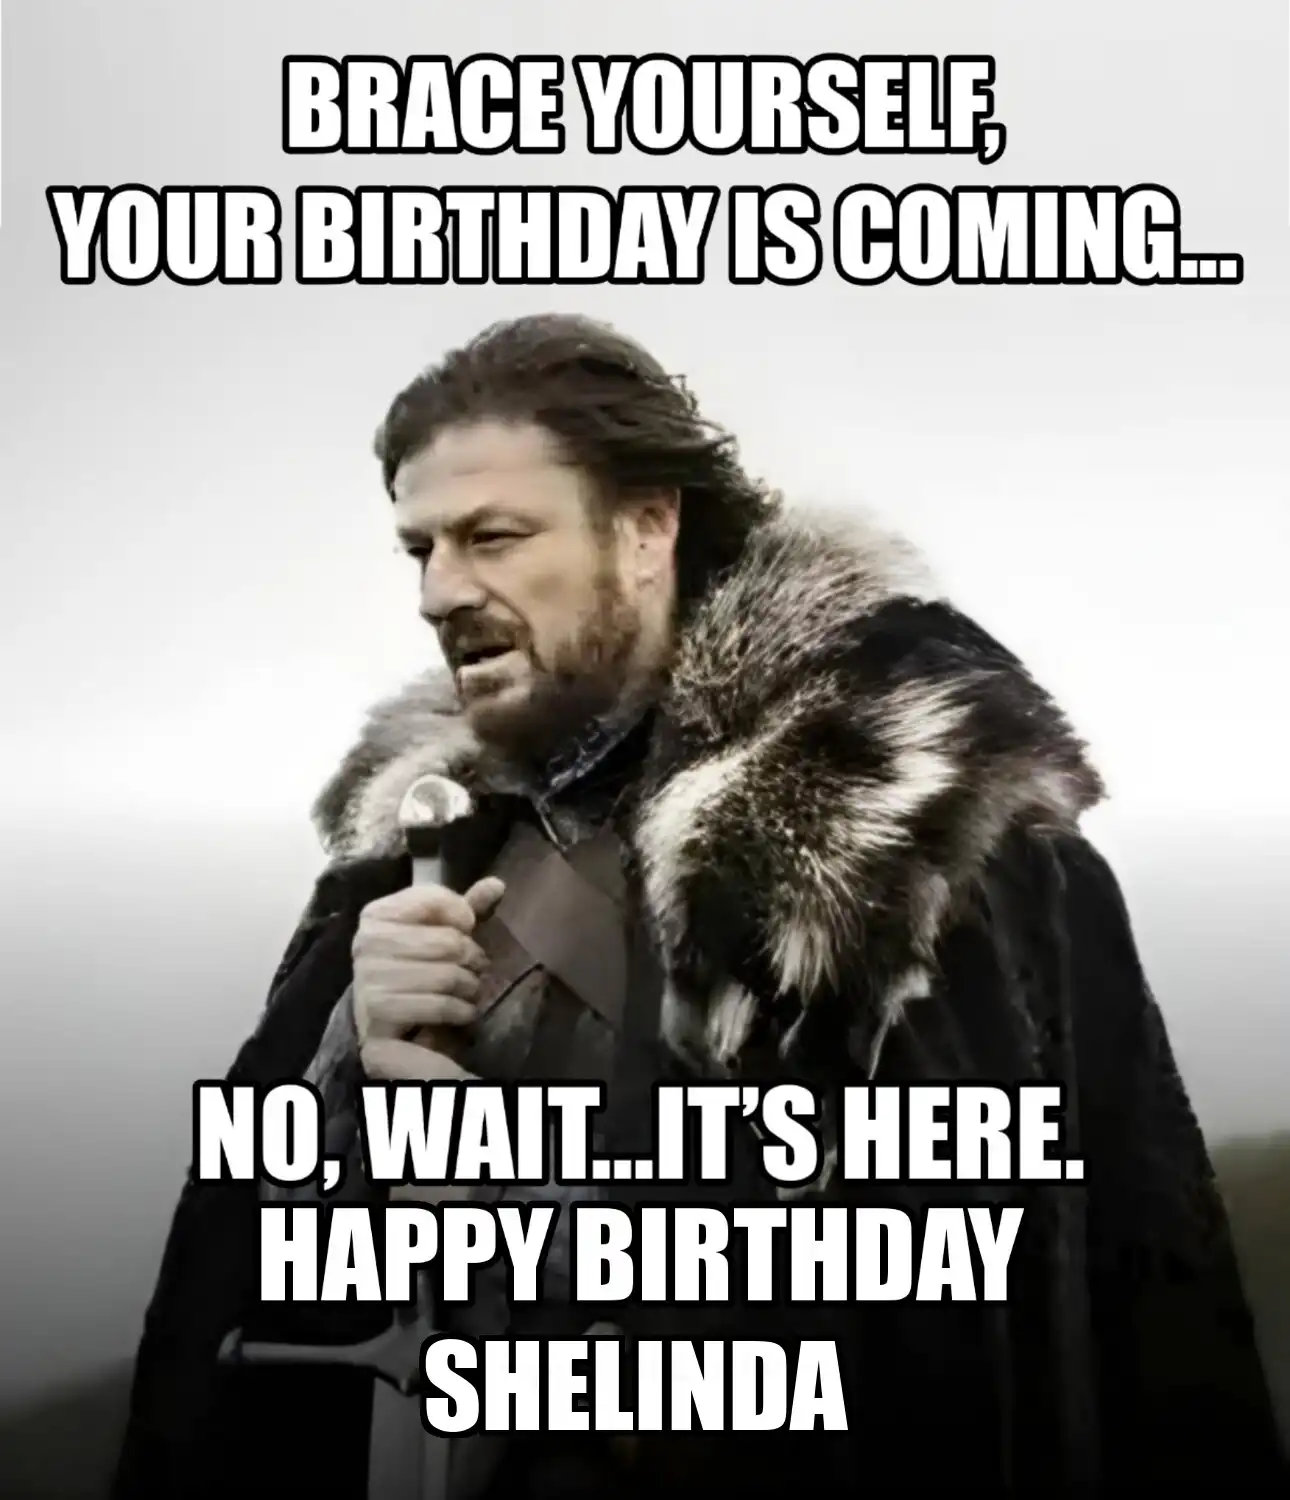 Happy Birthday Shelinda Brace Yourself Your Birthday Is Coming Meme